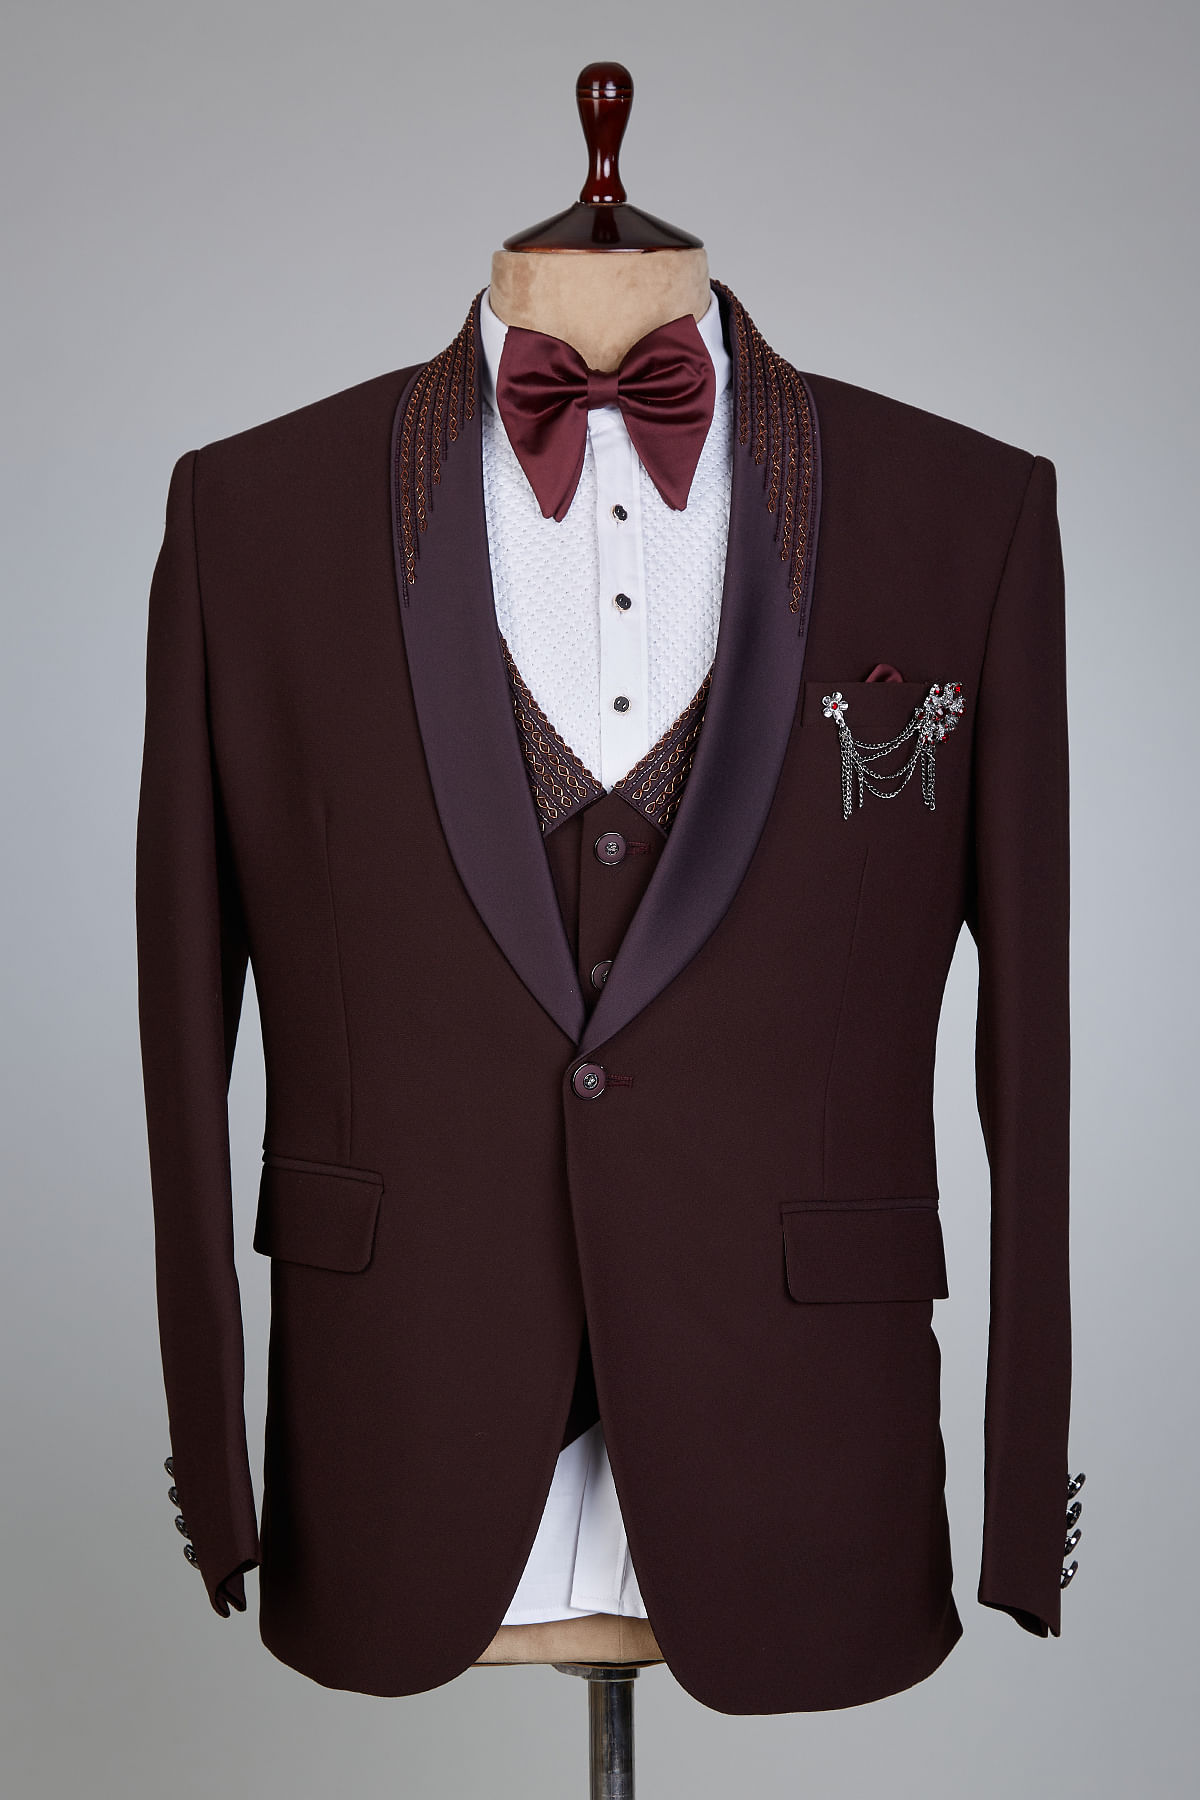 Barry.wang Men's Suit Chocolate Brown Solid Silk Peak Collar Suit